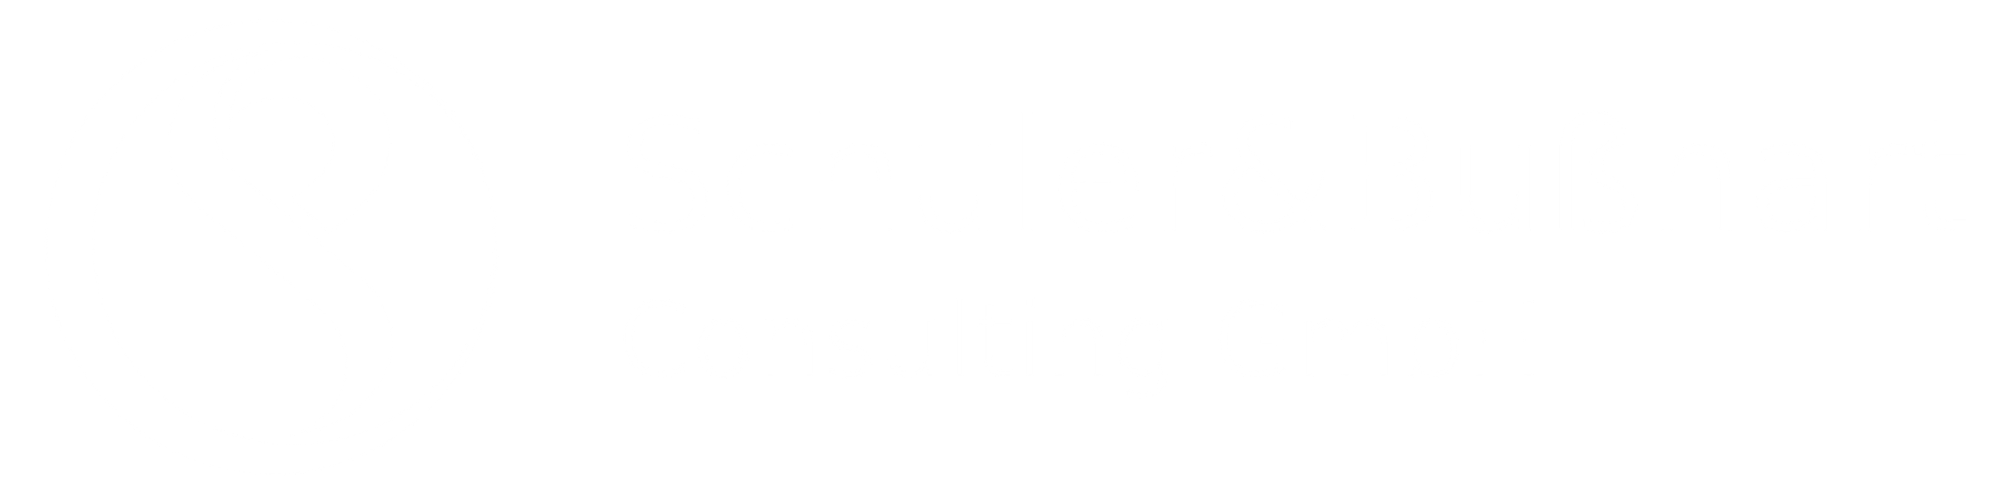 Schuler&Bußhart Consulting